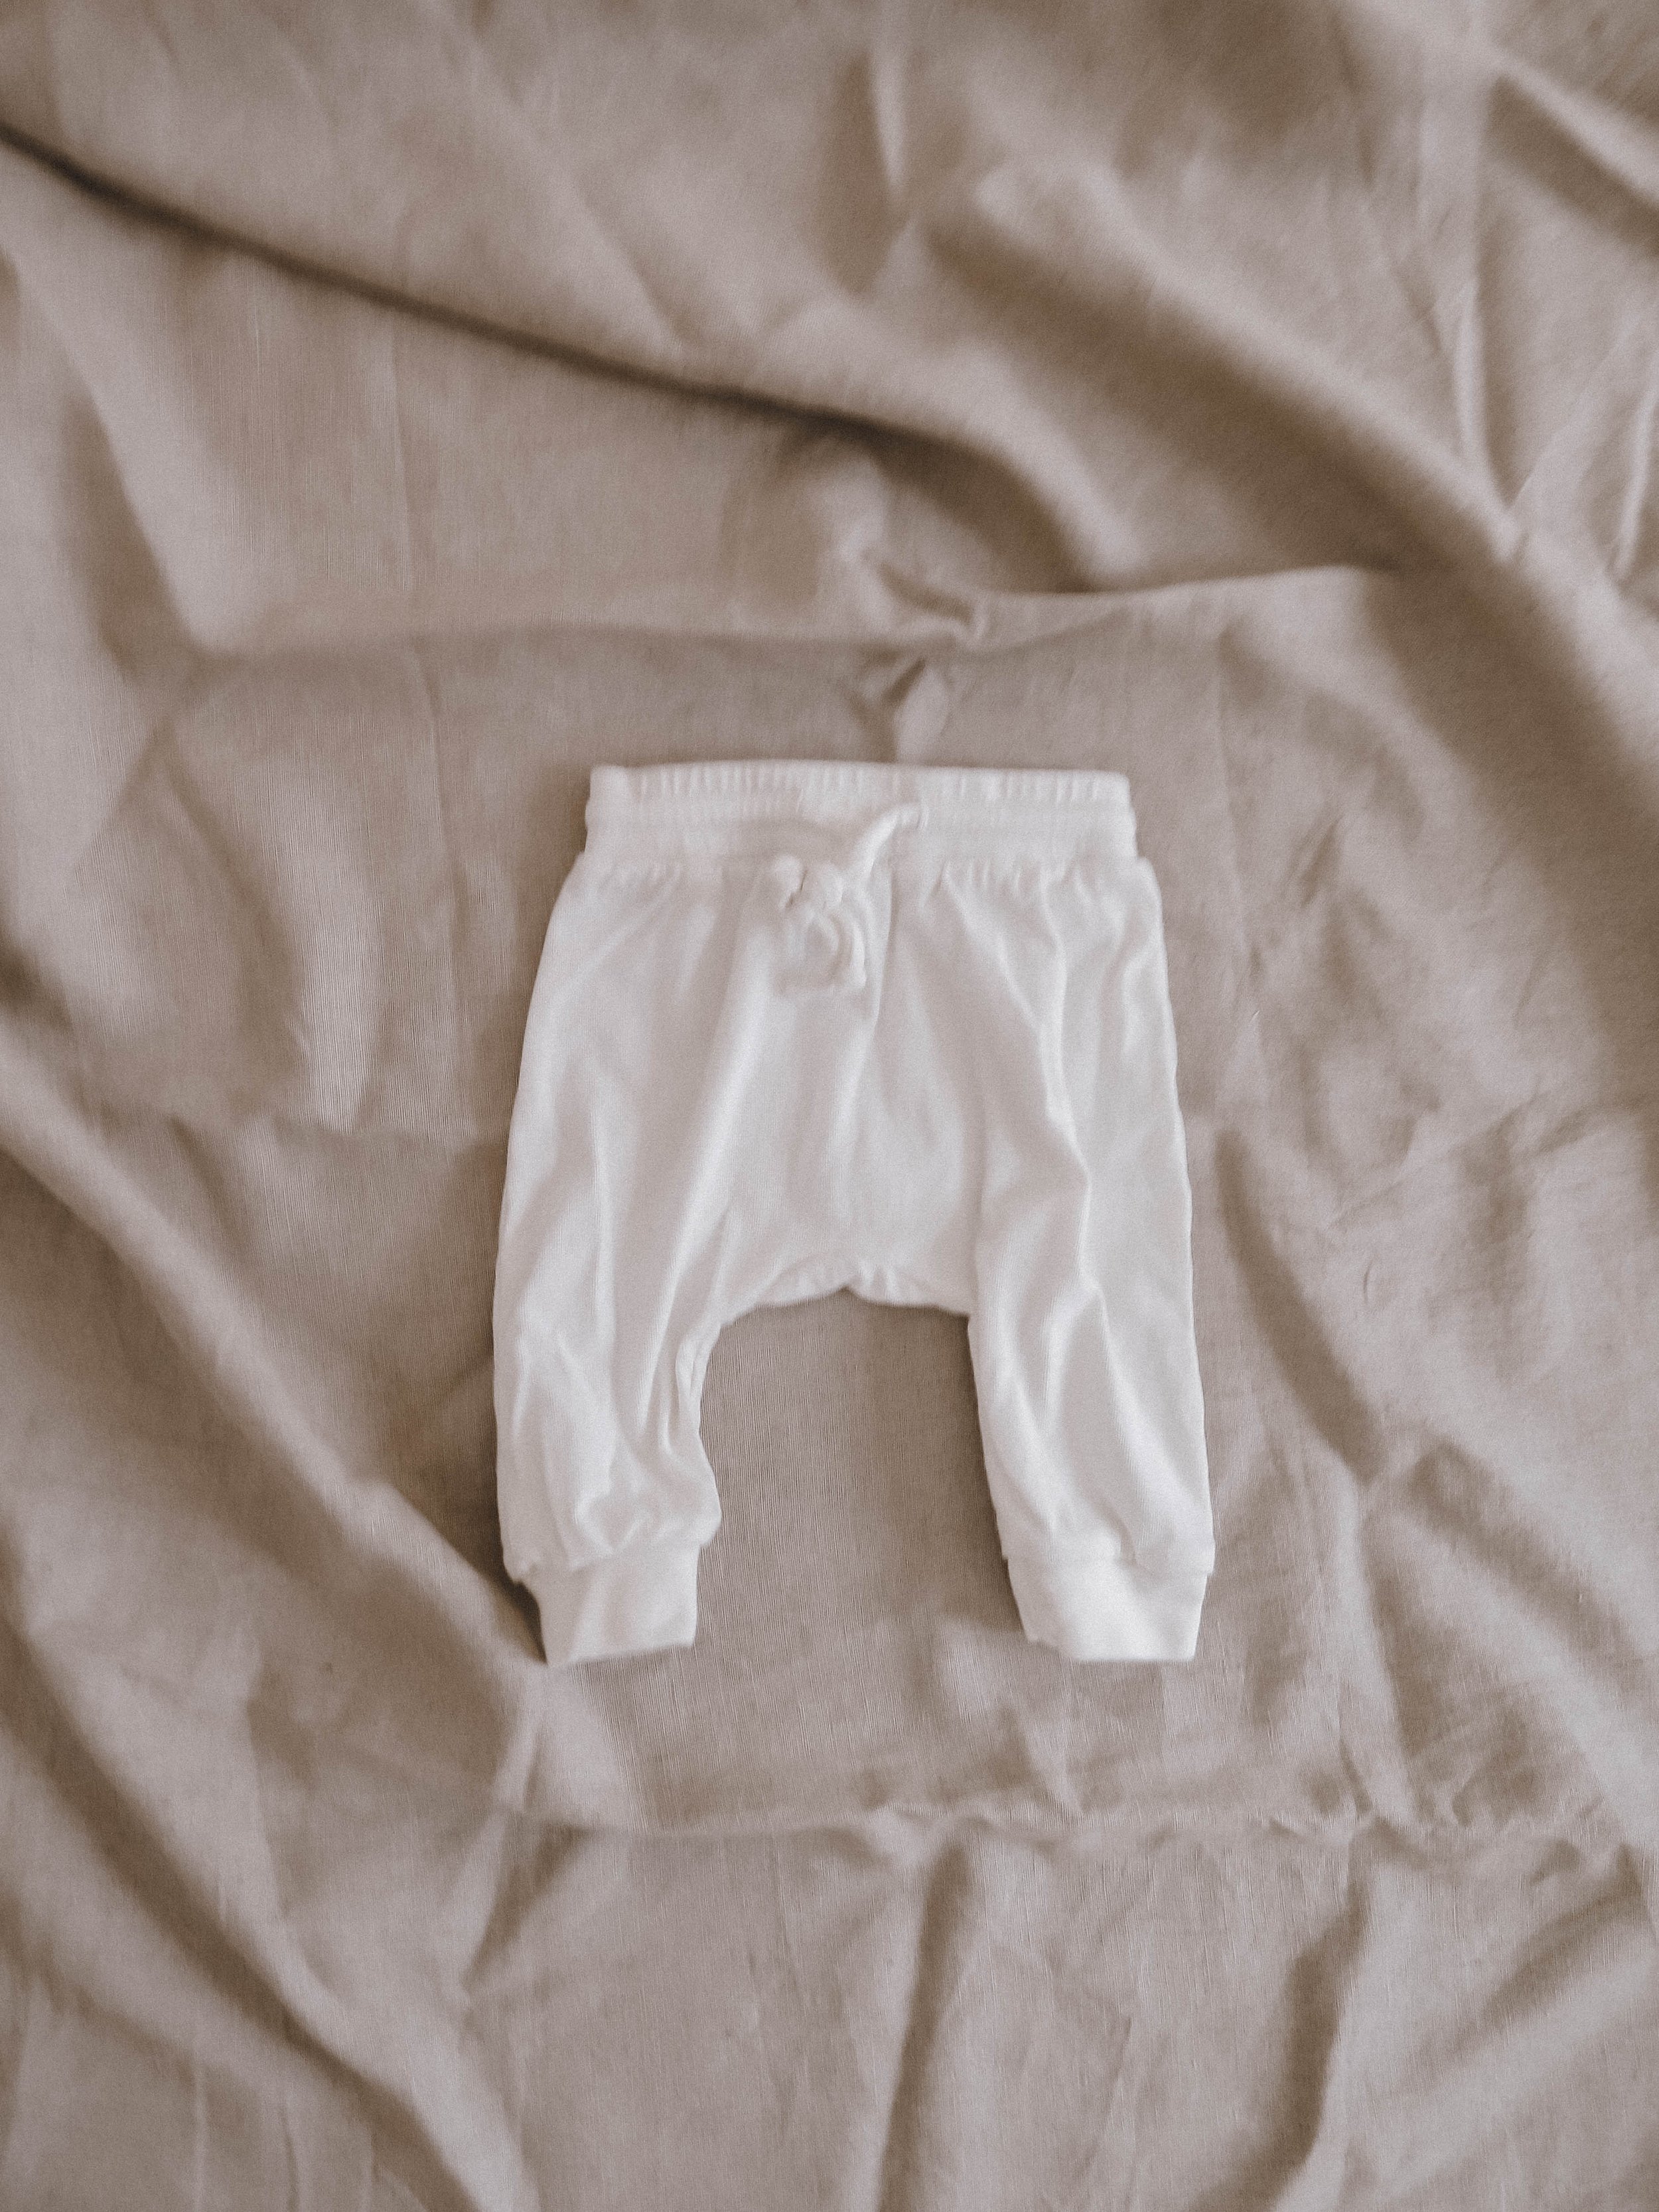 Dodot Infant Diapers Pants 7 +17kg 23uds